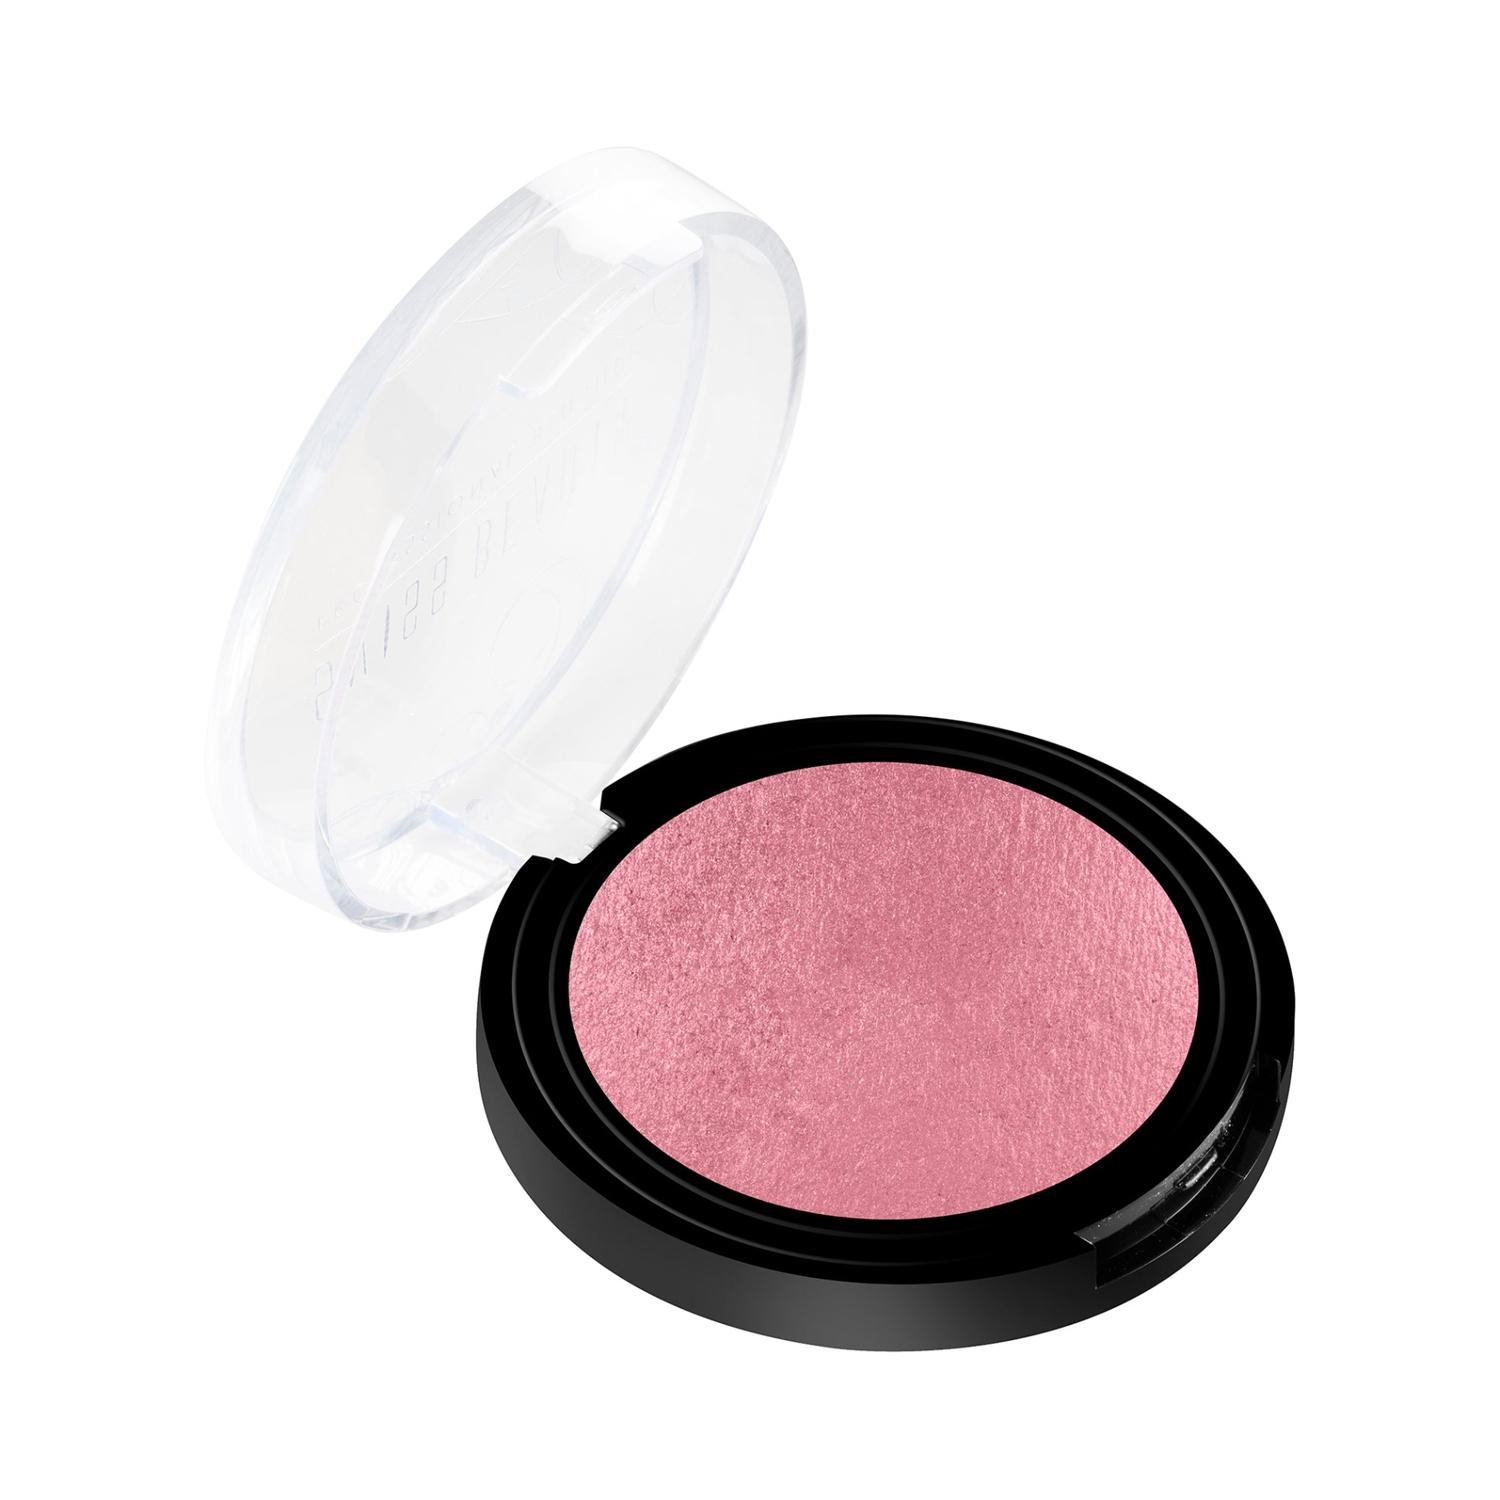 swiss beauty professional blusher - 05 deep pink (6g)